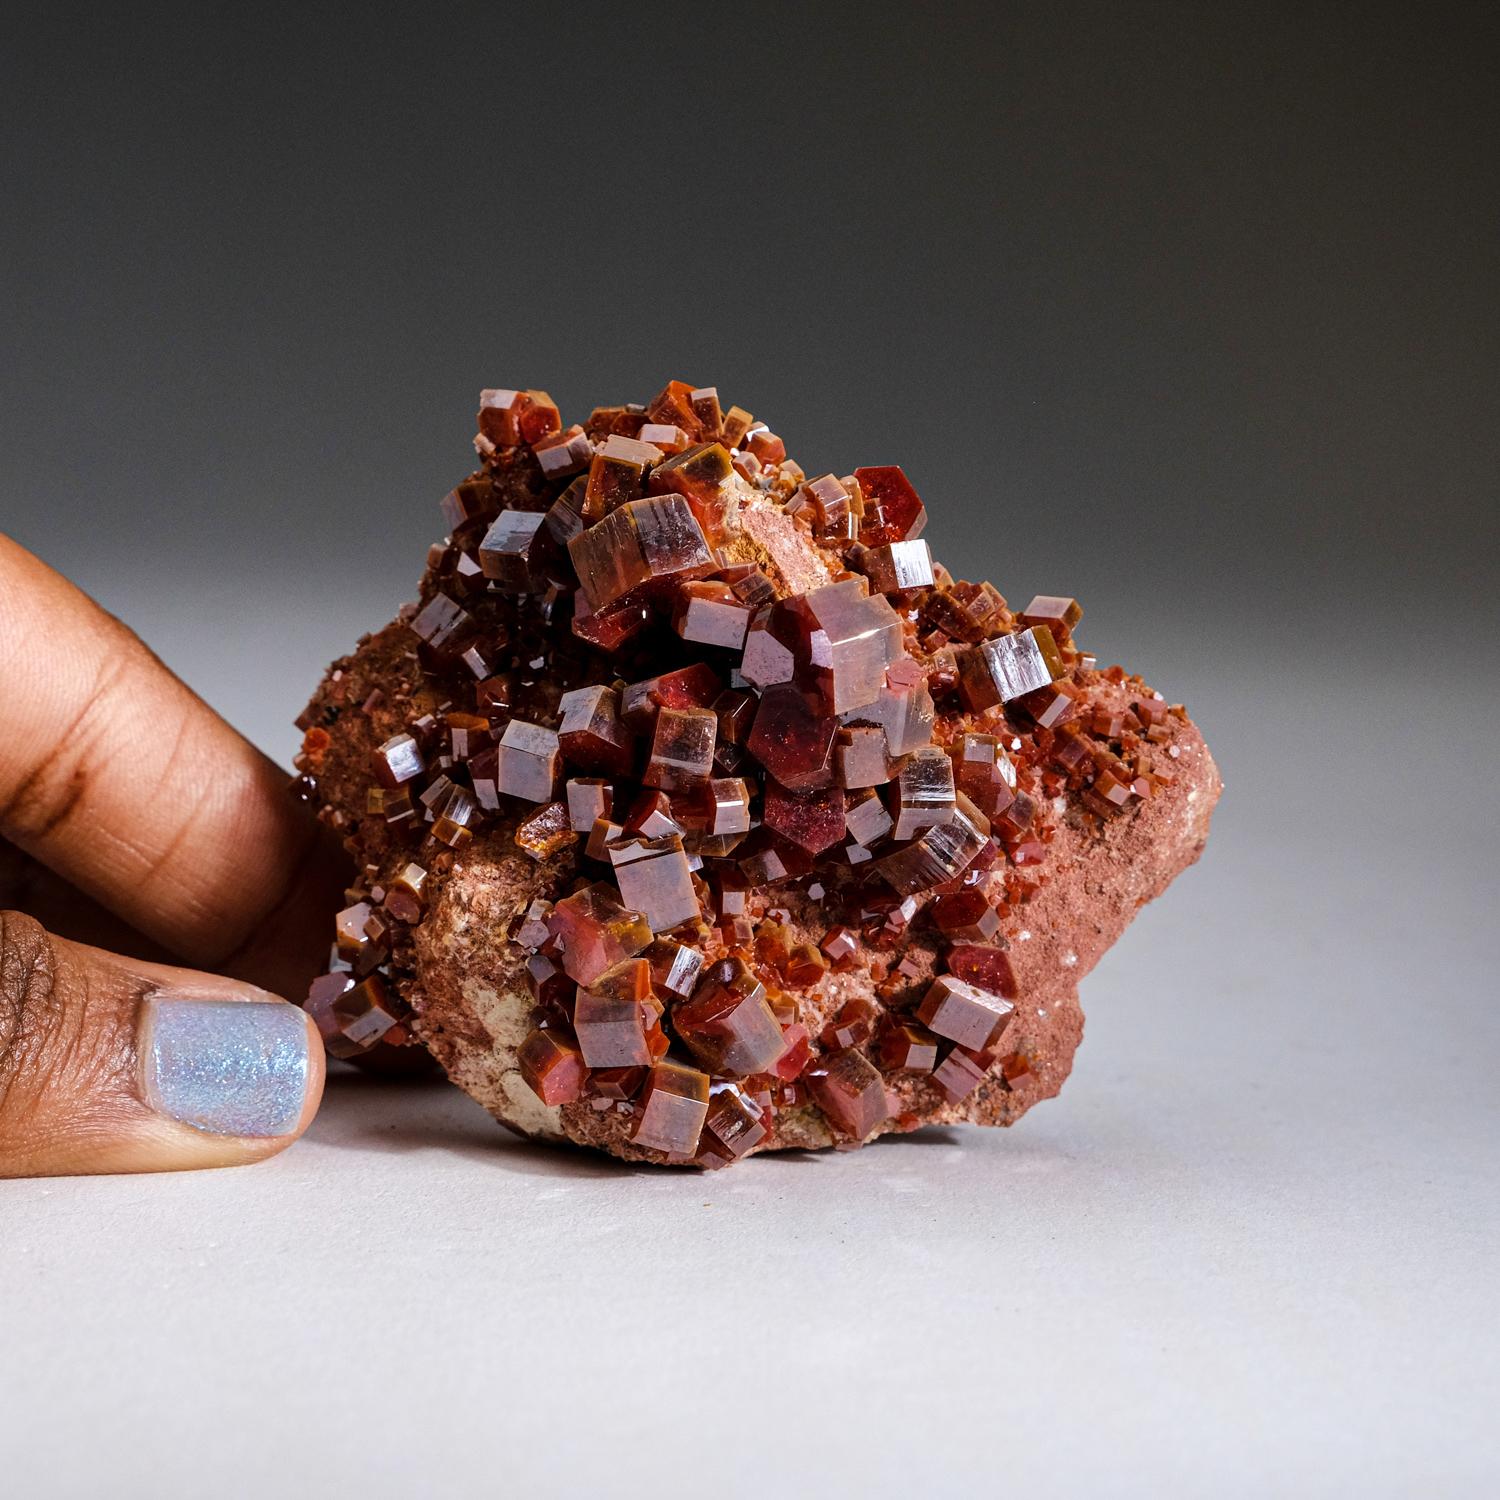 Genuine Vanadinite Crystal Cluster on Matrix from Morocco (183.4 grams) For Sale 1